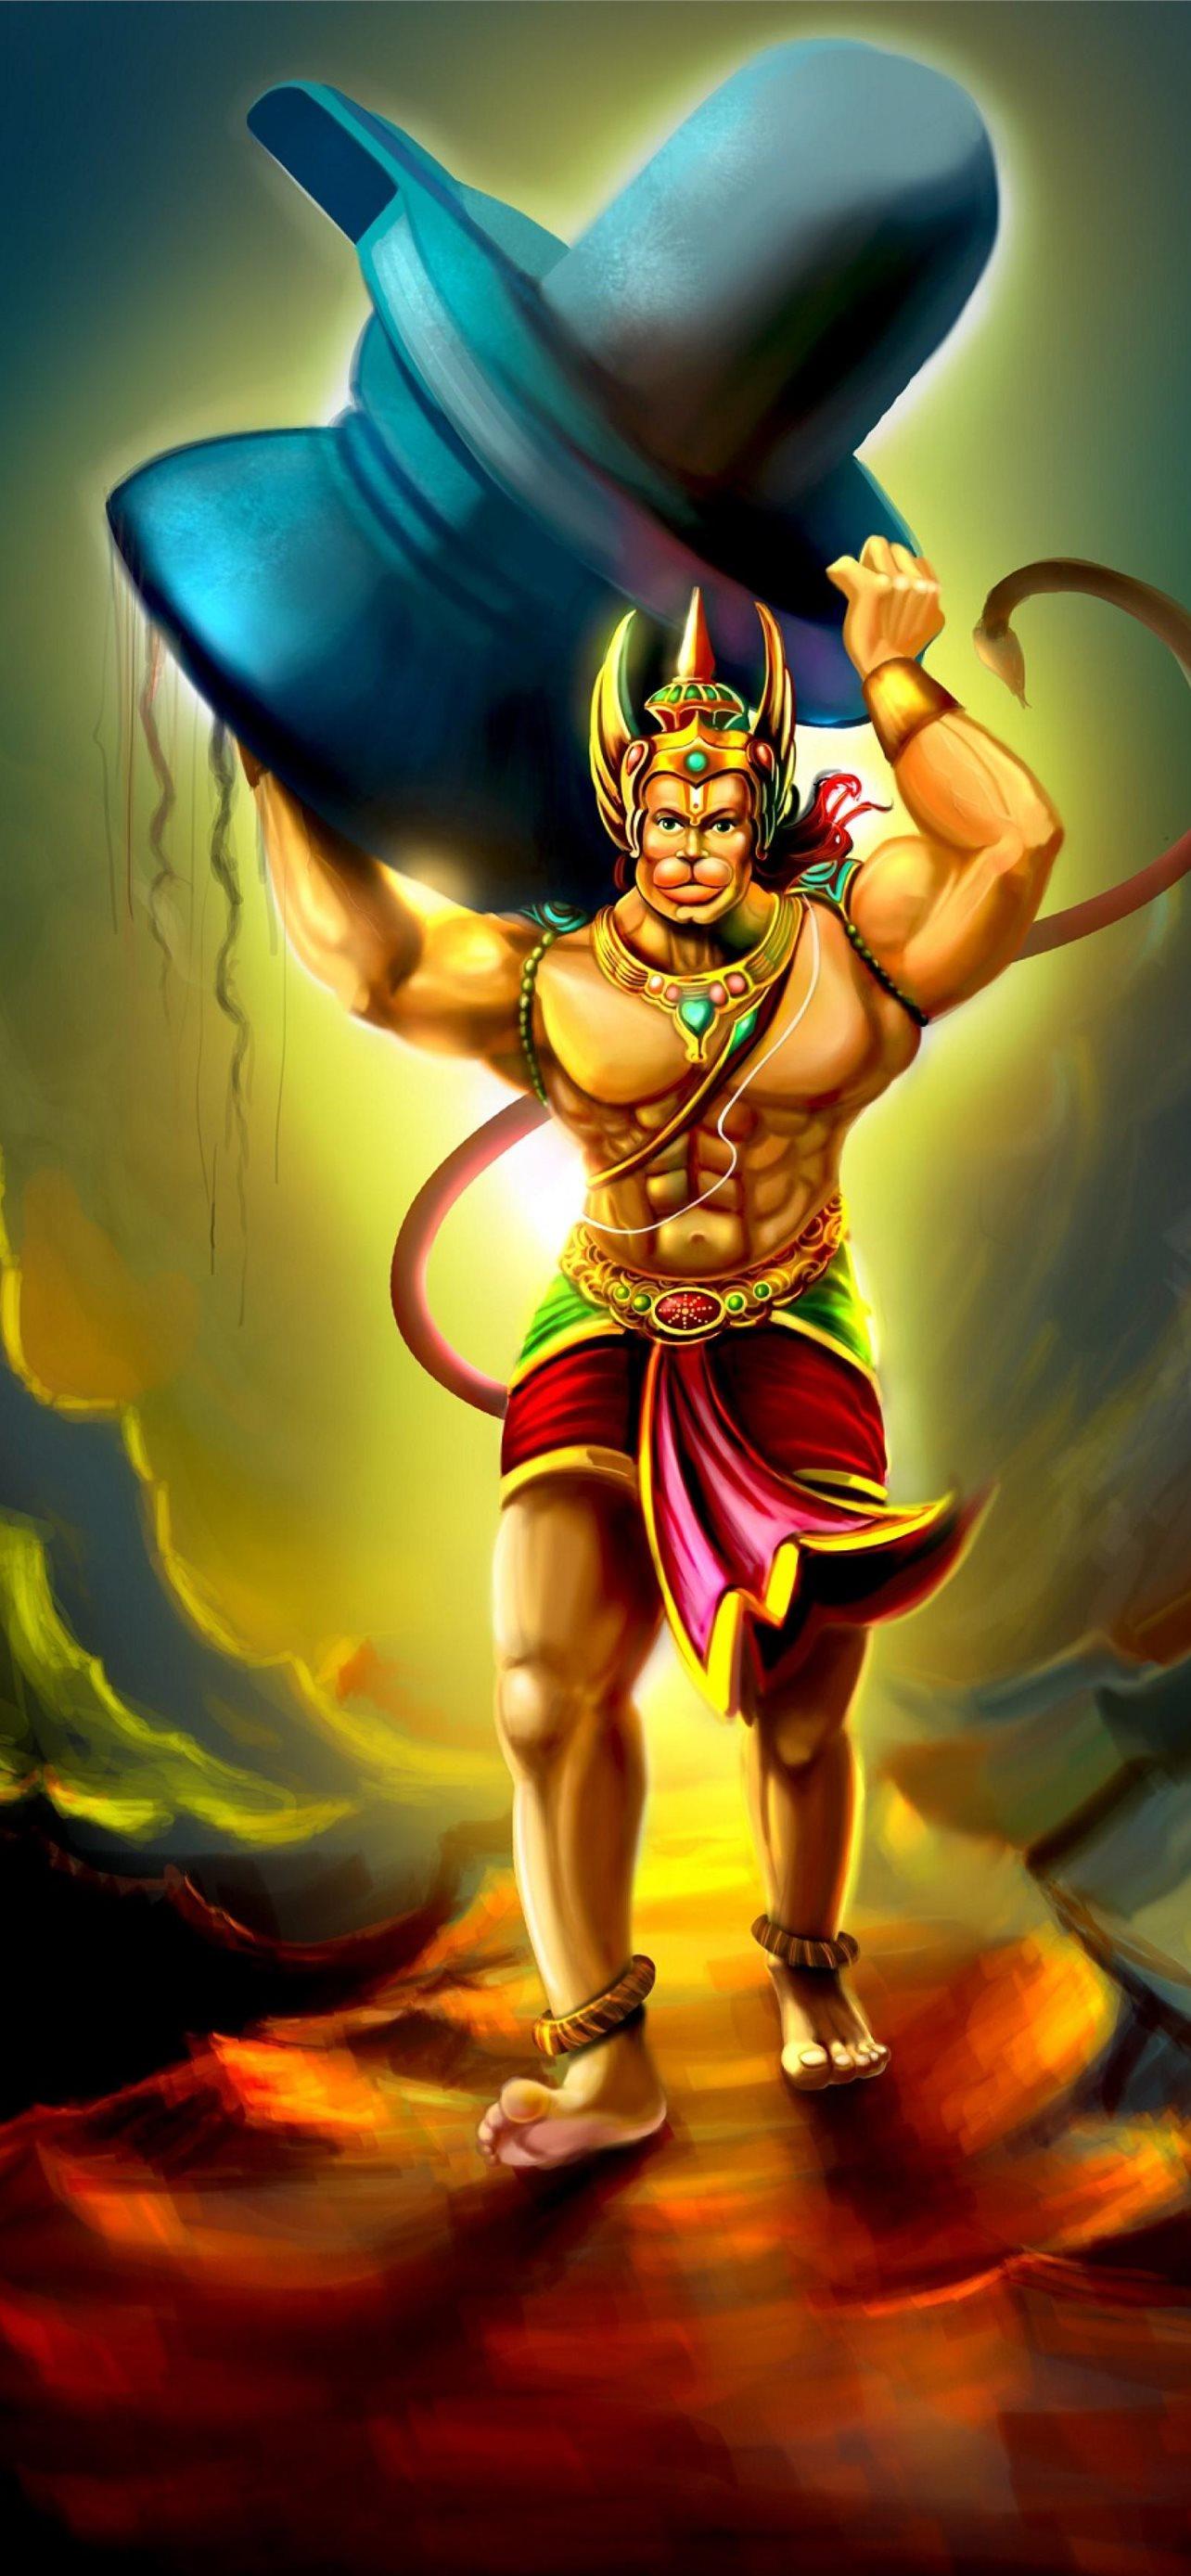 100+] Hanuman 4k Hd Wallpapers | Wallpapers.com